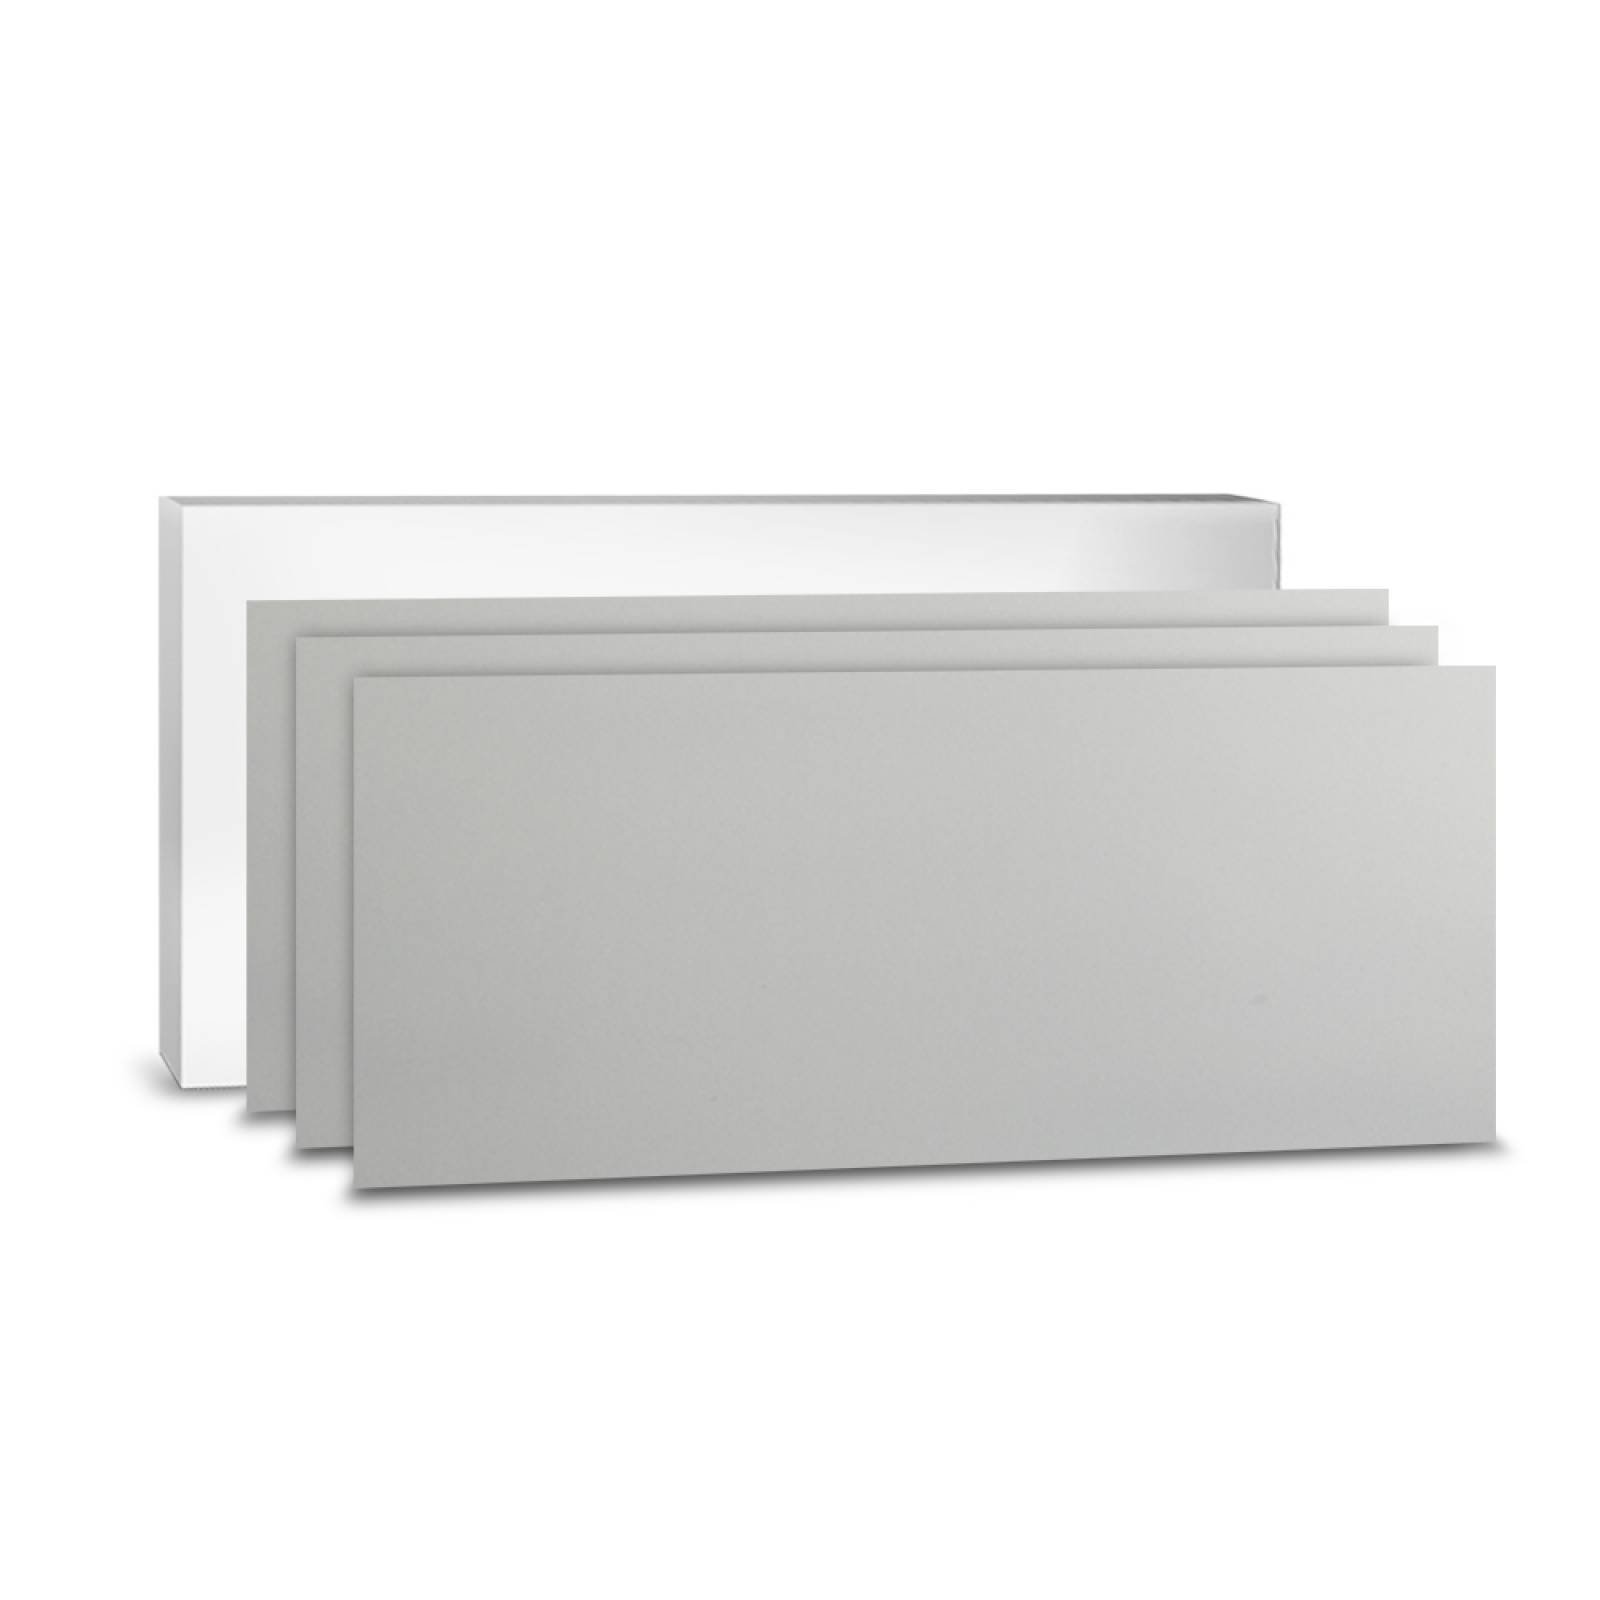 Aislante Cerámico Protector Térmico para Techo de 60 x 25 cm Blanco, Paquete 3 Piezas, Mod: 1PTTP3Bl